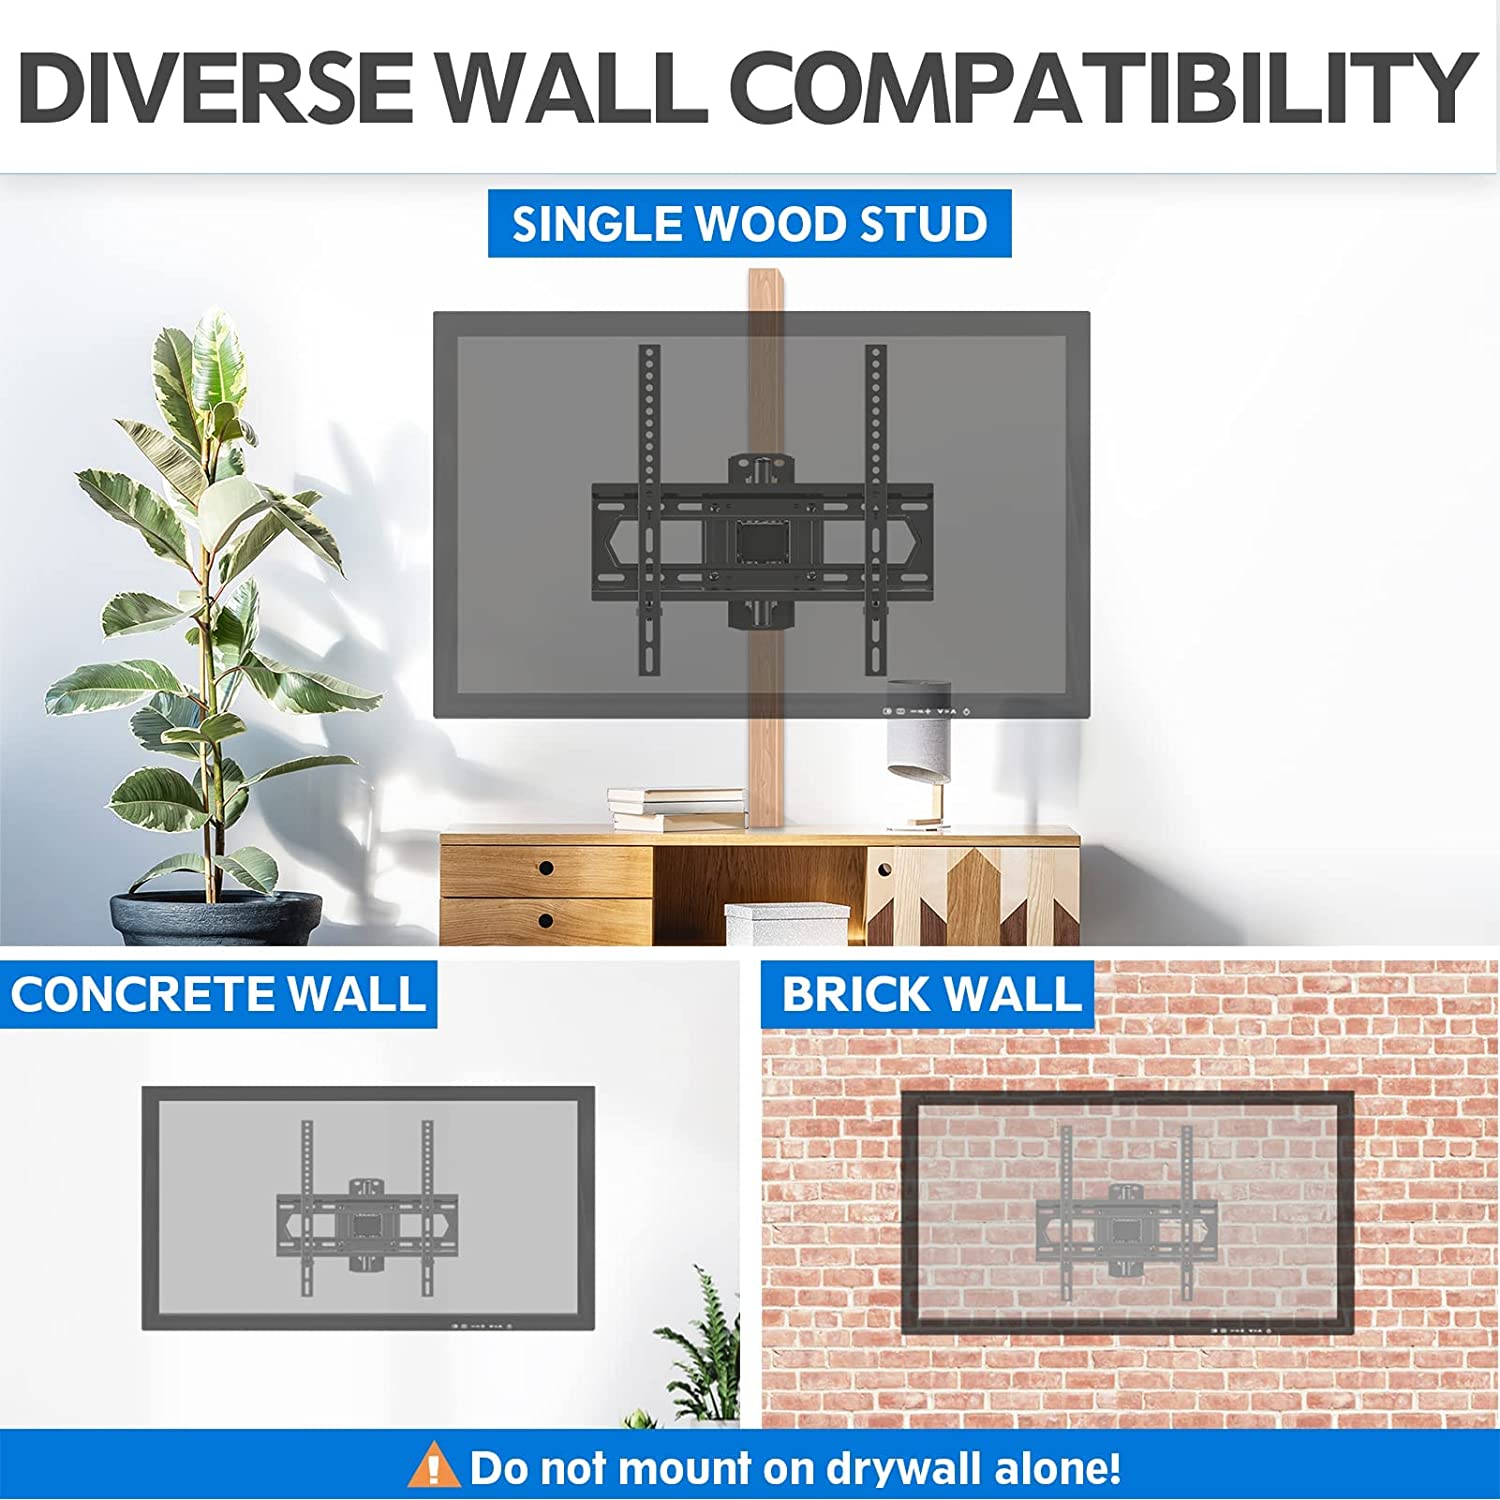 installs on single wood stud or concrete/brick wall